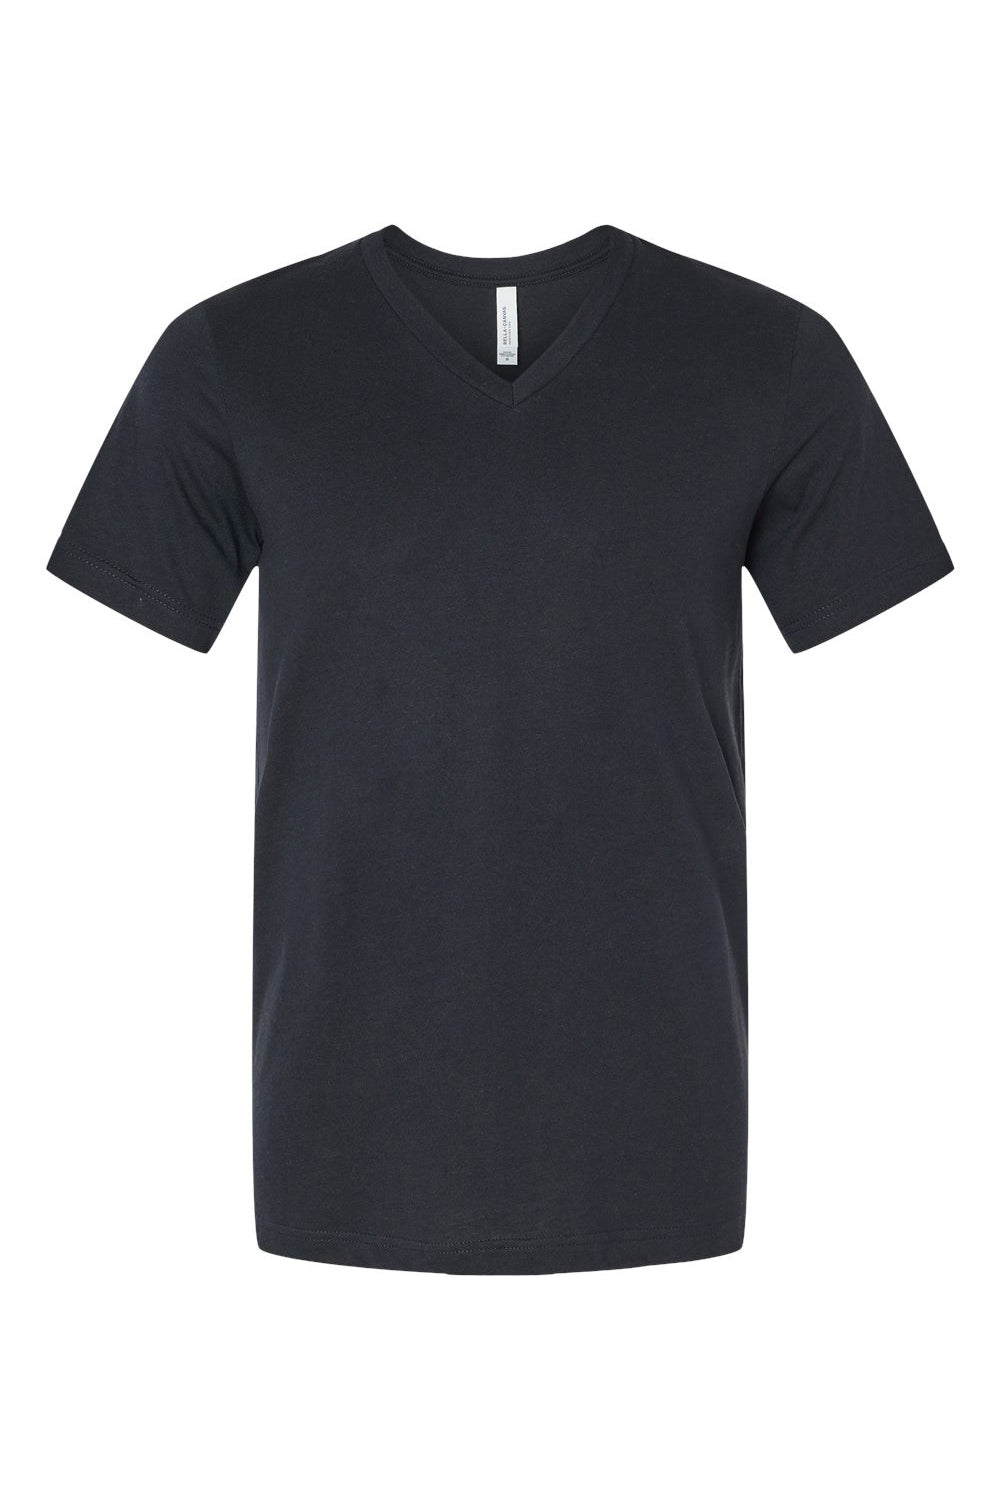 Bella + Canvas BC3005CVC Mens CVC Short Sleeve V-Neck T-Shirt Solid Black Flat Front